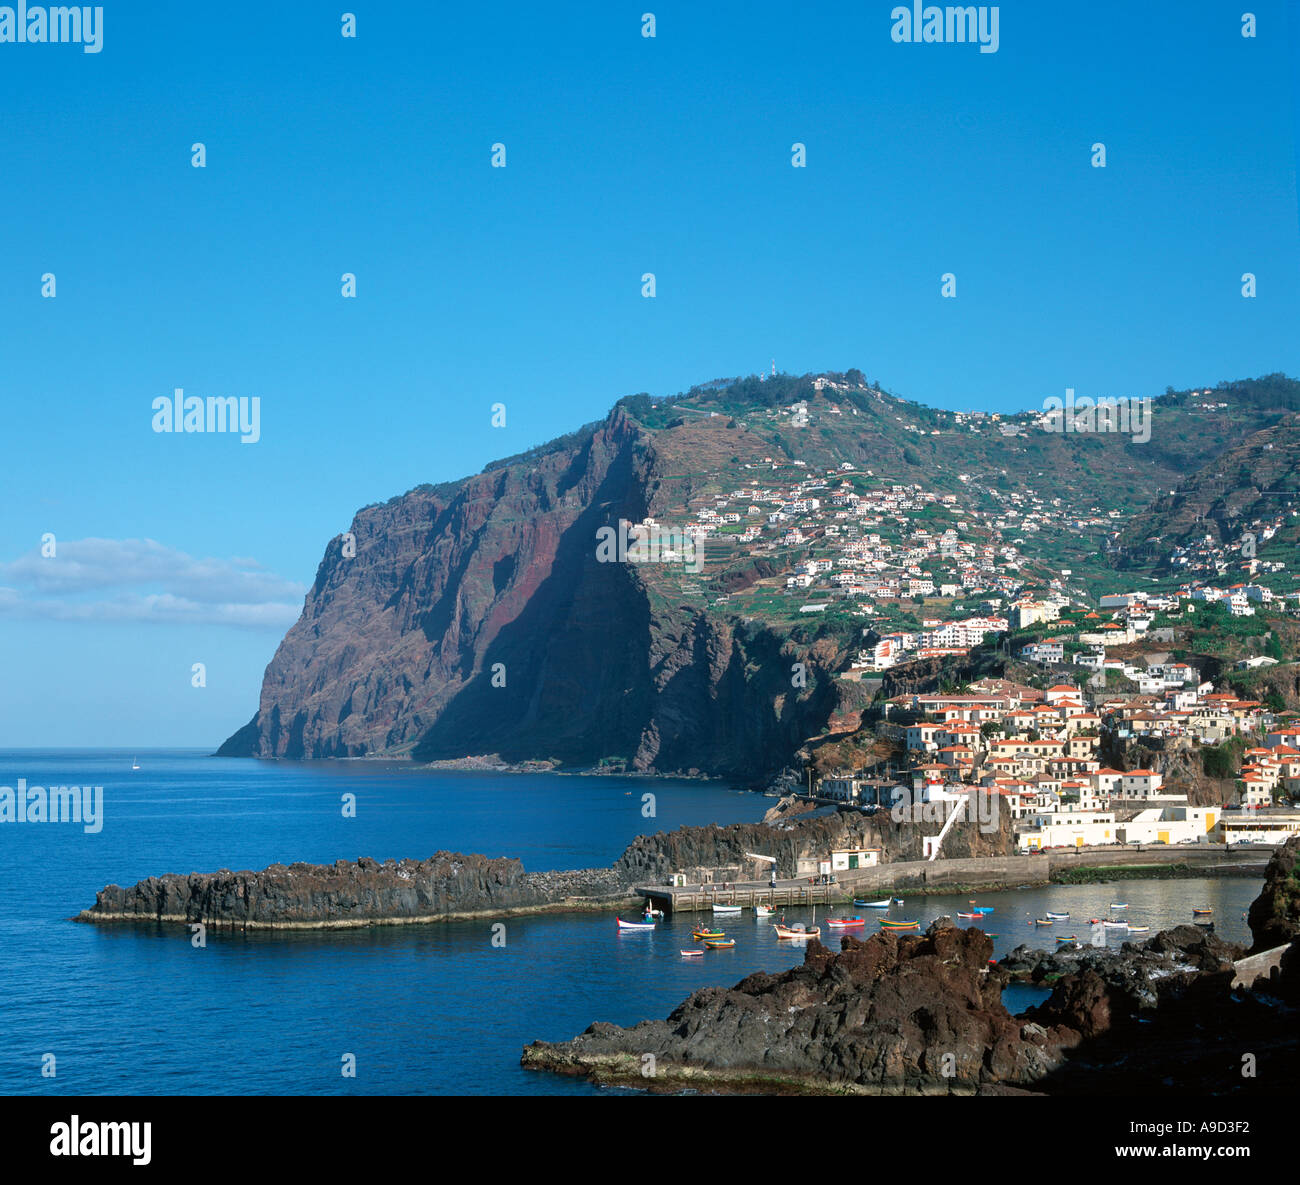 The south coast fishing village of Camara de Lobos (where Winston Churchill used to paint),  Madeira, Portugal Stock Photo